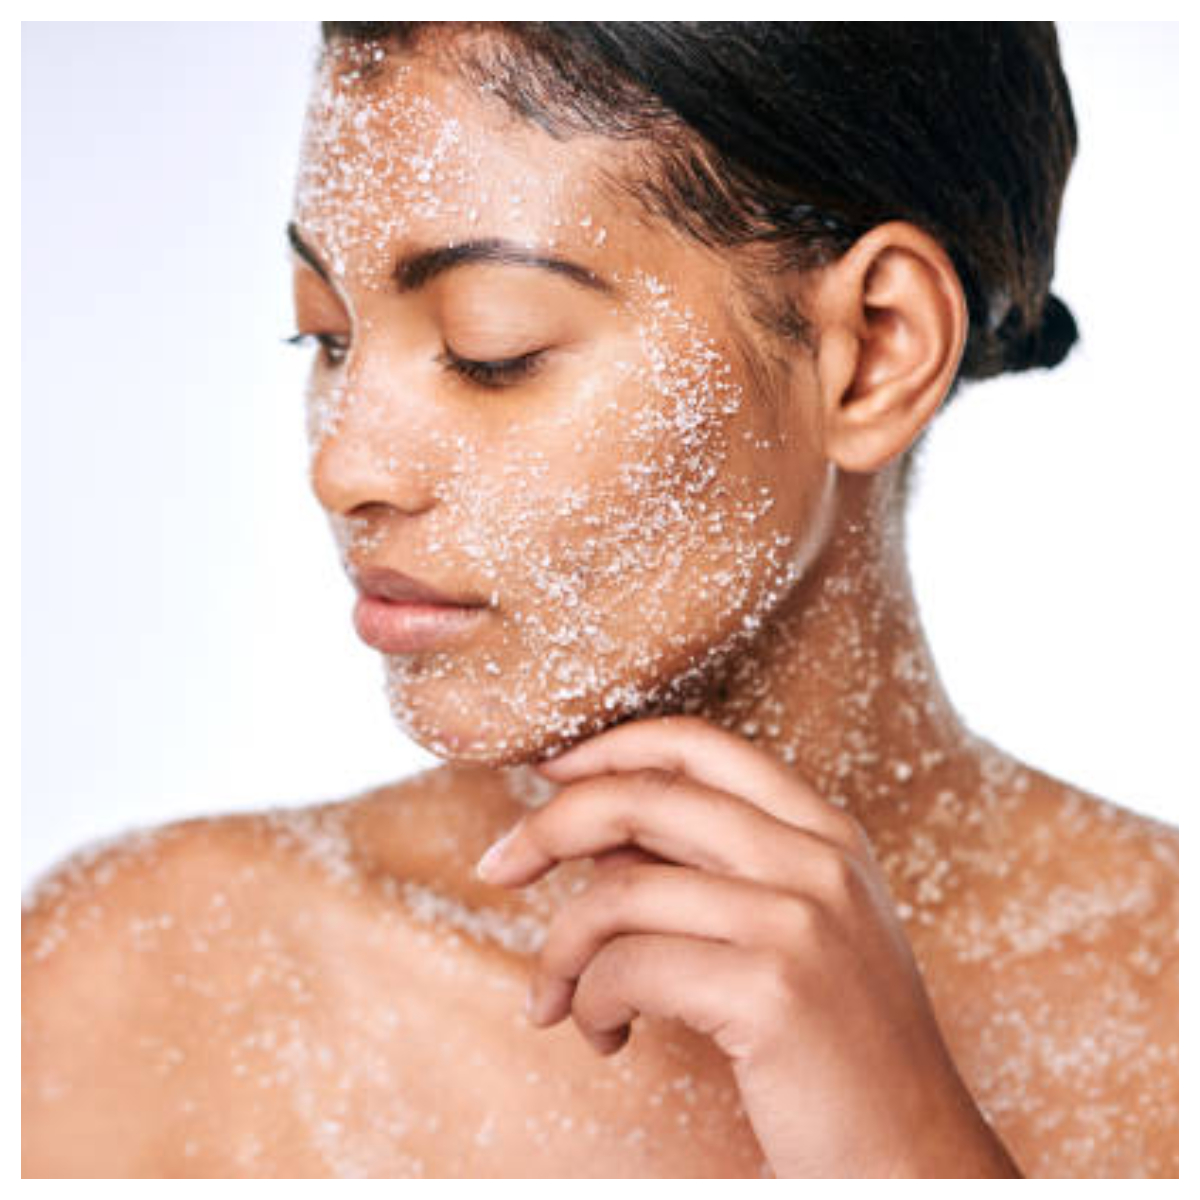 DIY coconut oil sugar scrubs: Latest beauty trend for glowing skin